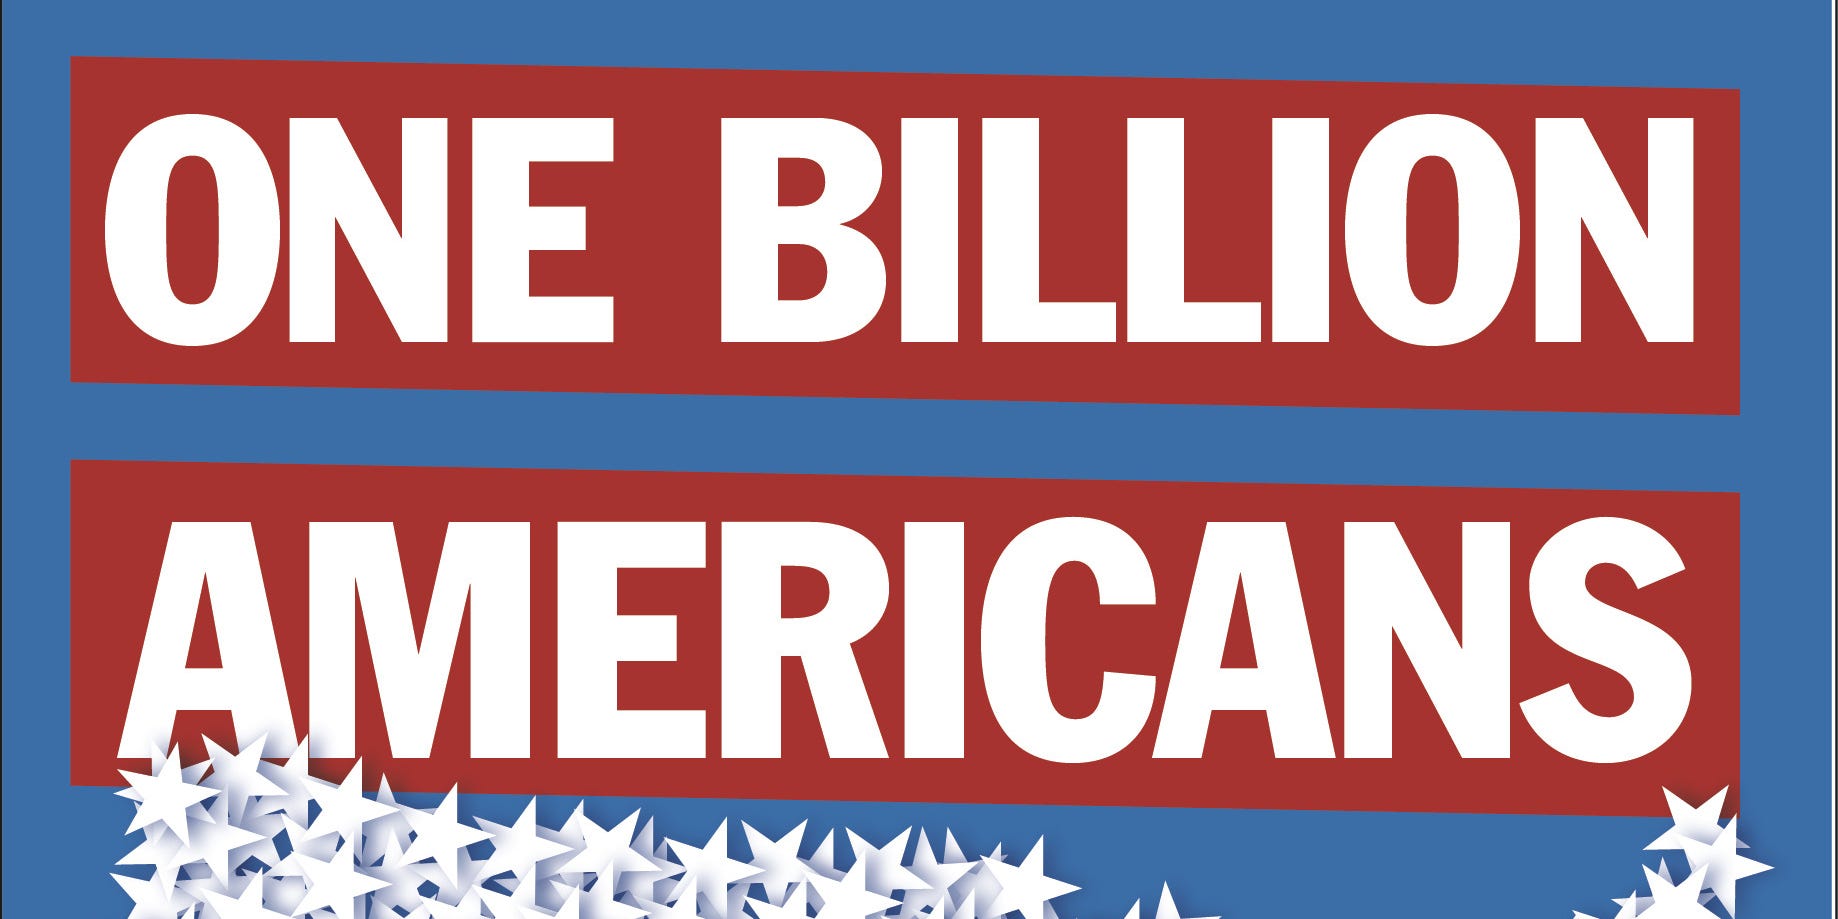 One Billion Americans matt yglesias book cover